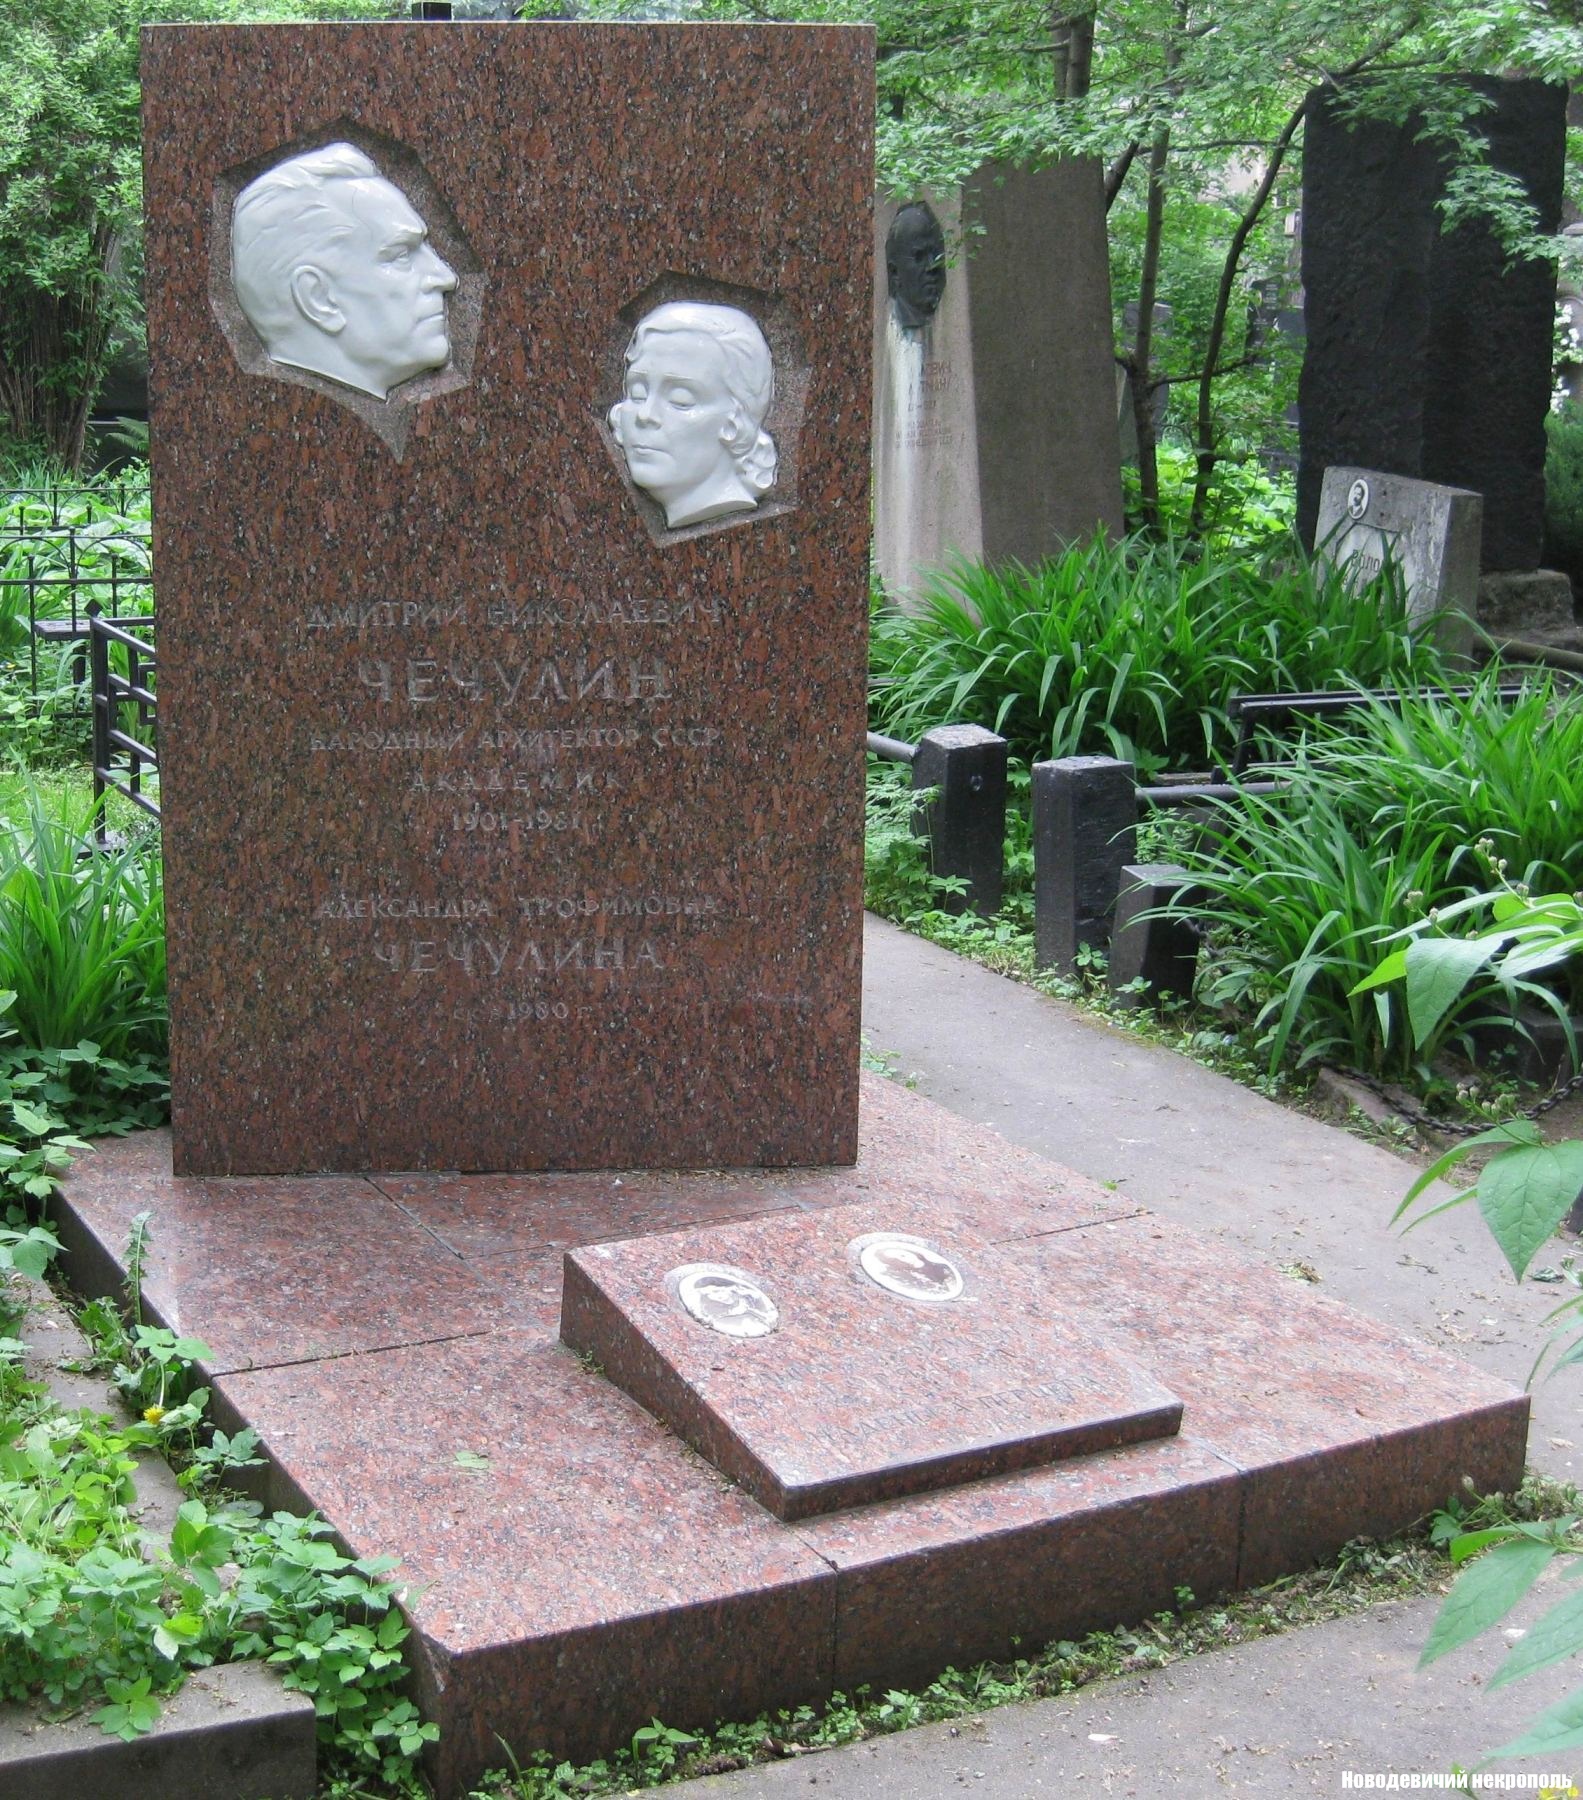 Памятник на могиле Чечулина Д.Н. (1901-1981), ск. Г.Чечулина, арх. О.Великорецкий, на Новодевичьем кладбище (3-17-12).